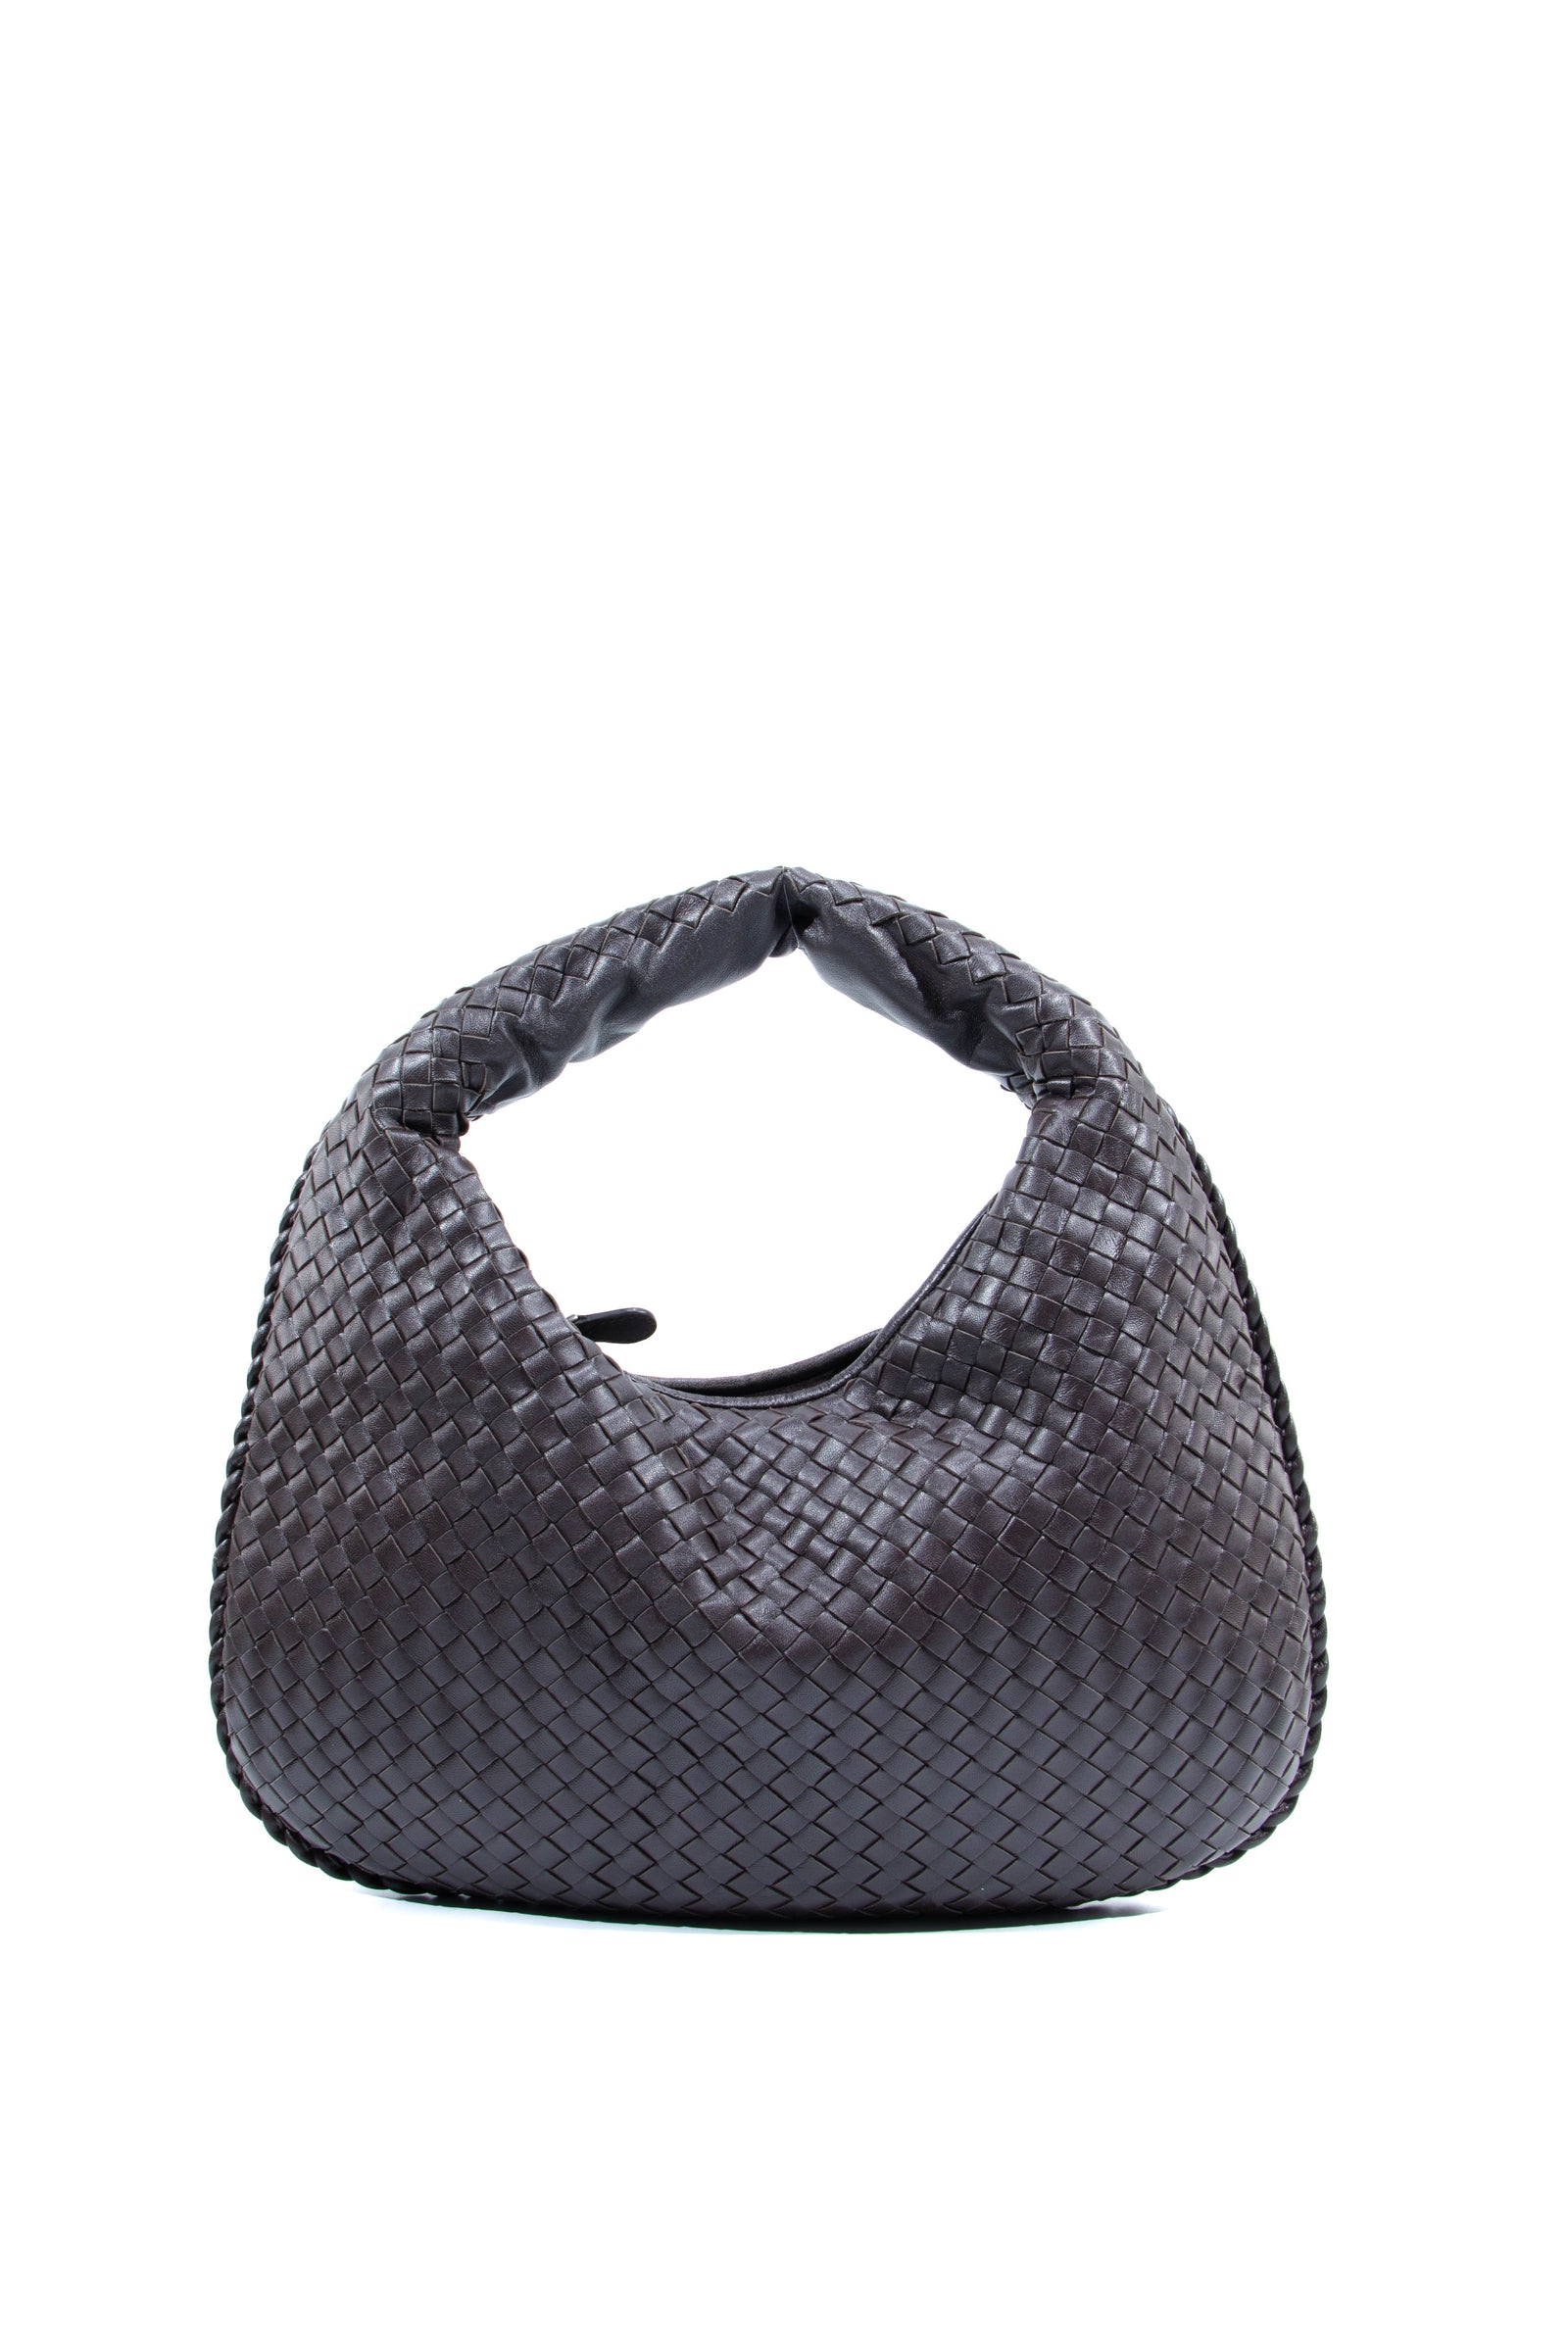 Goyard Bags - Buy your next Goyard Bag at Collector's Cage